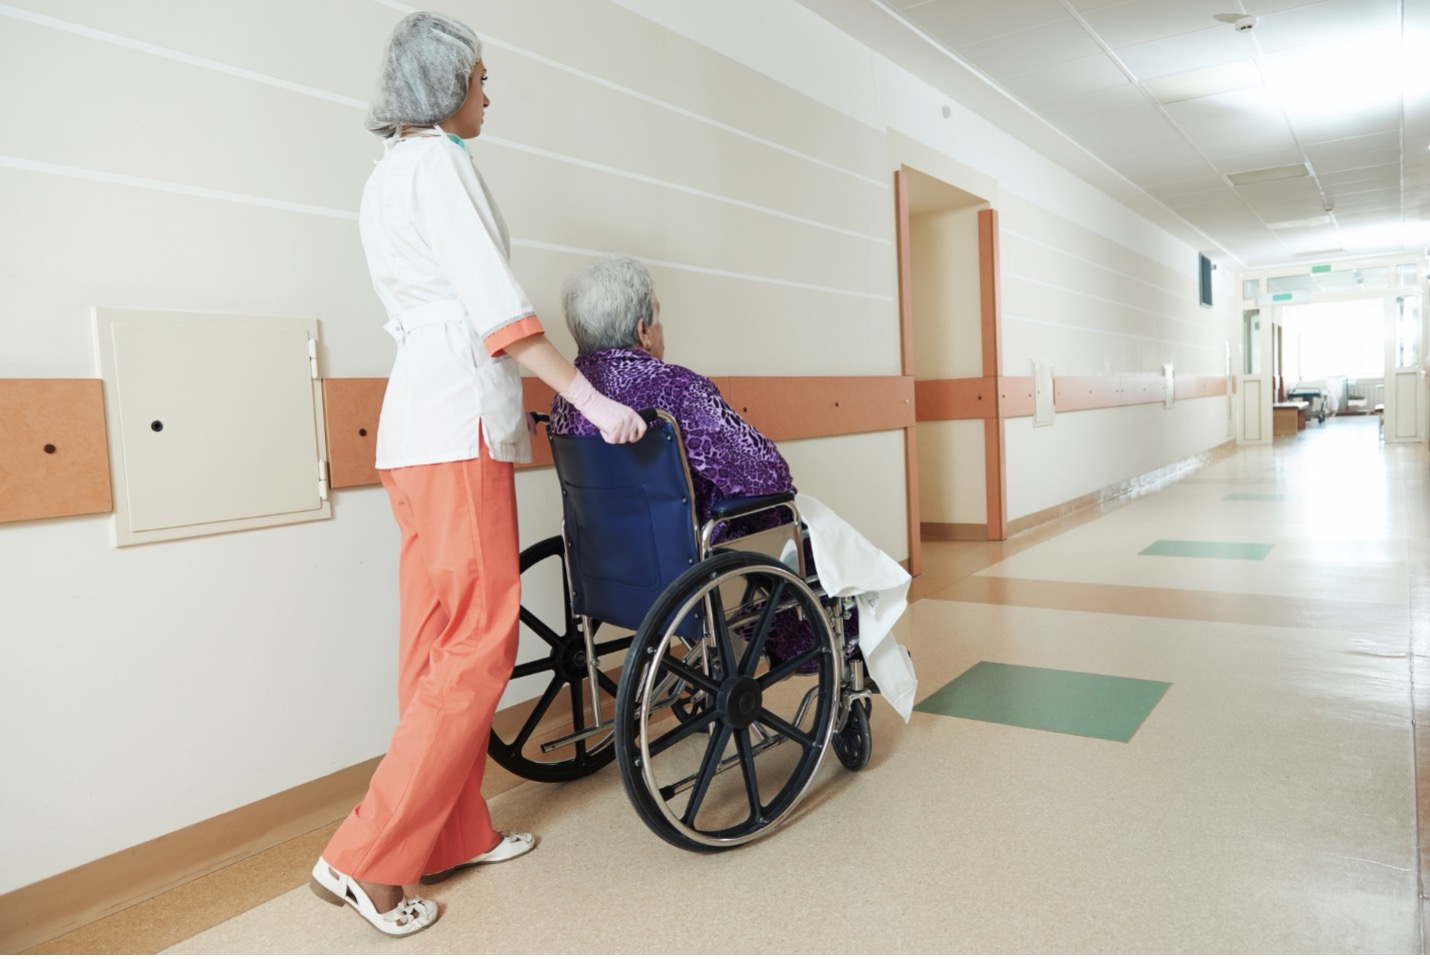 Nurse pushing elderly patient in wheelchair down facility hallway